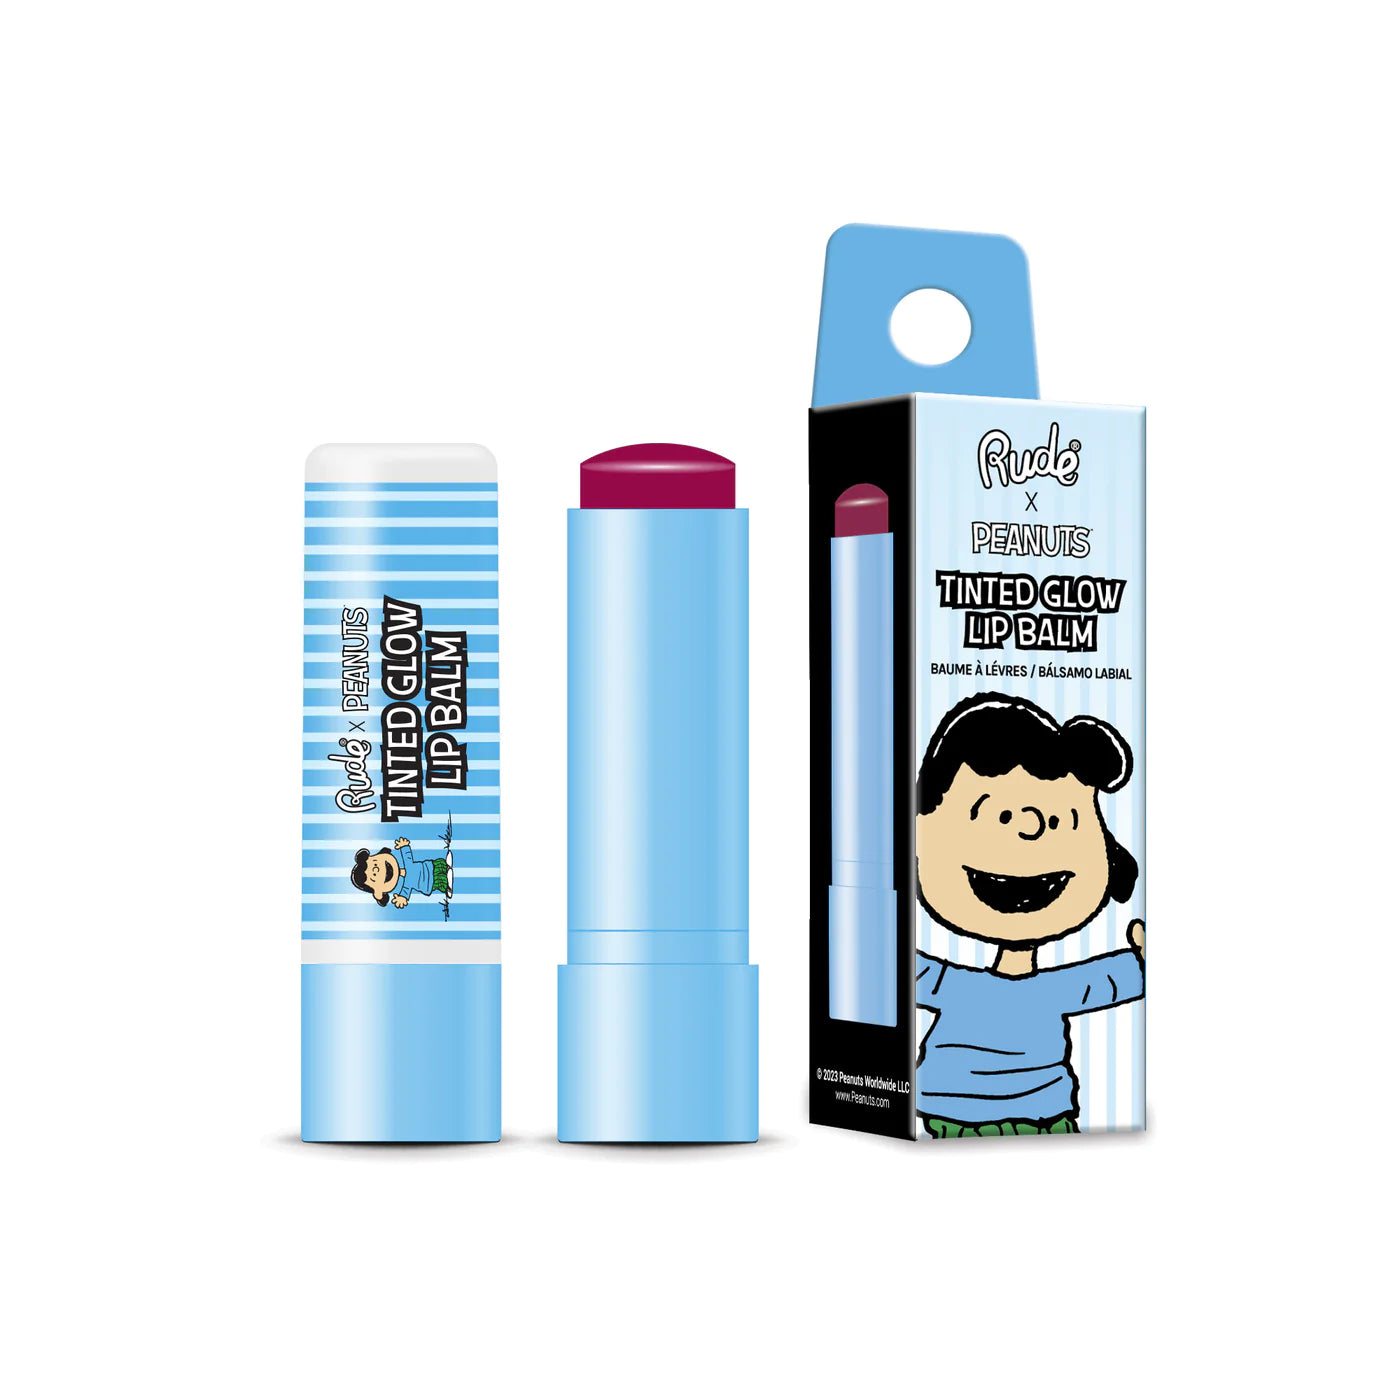 Rude Cosmetics - Peanuts Tinted Glow Lip Balm Lucy